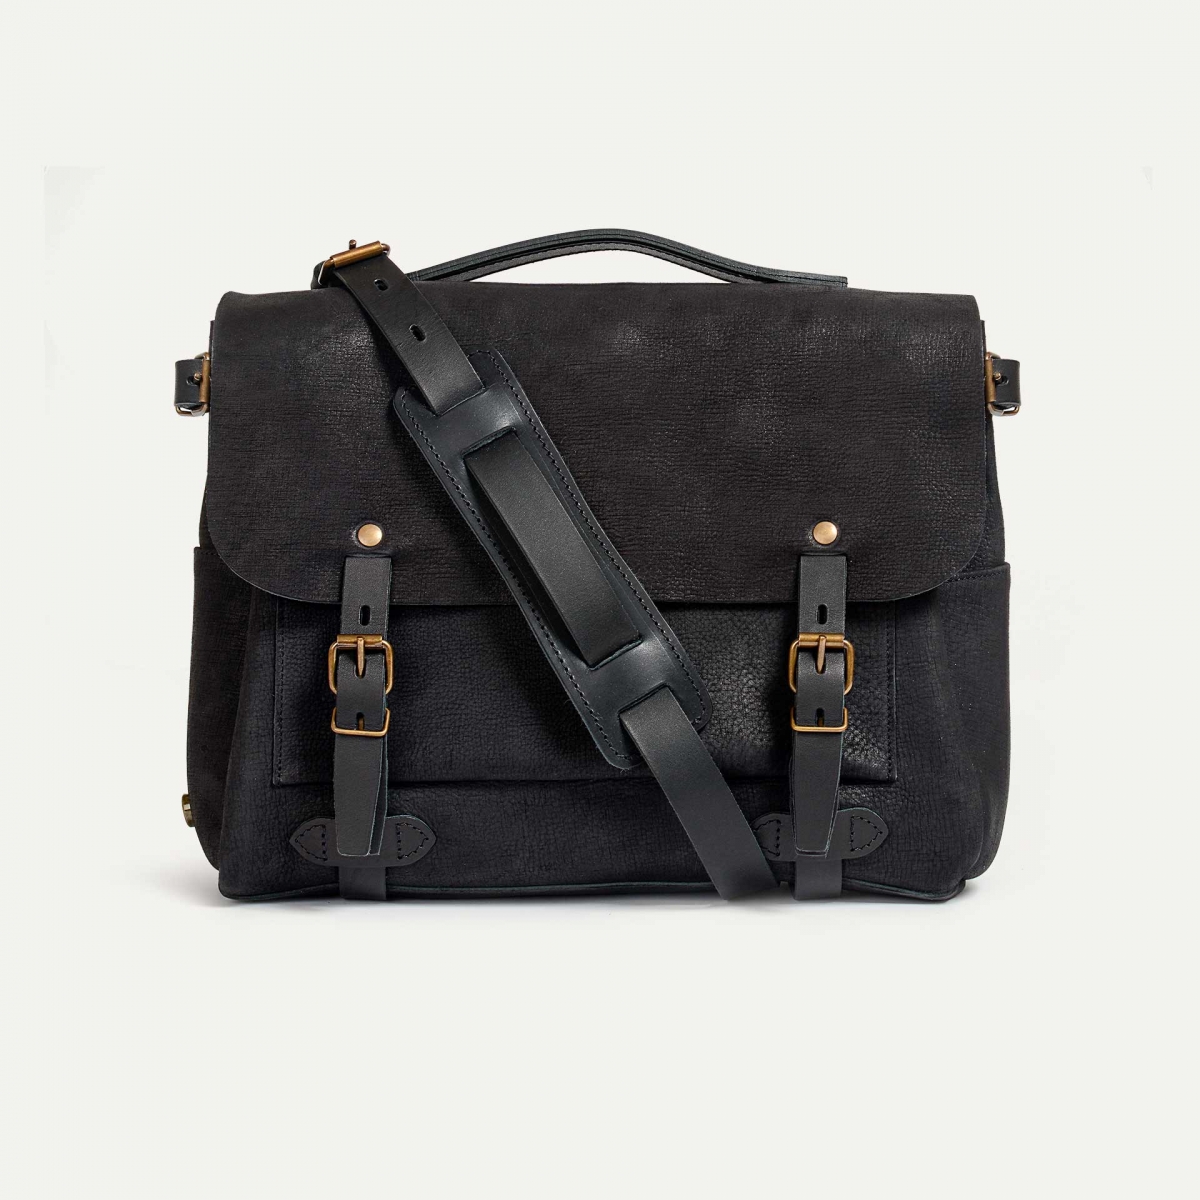 Postman bag Éclair M - Charcoal black / Waxed Leather (image n°1)